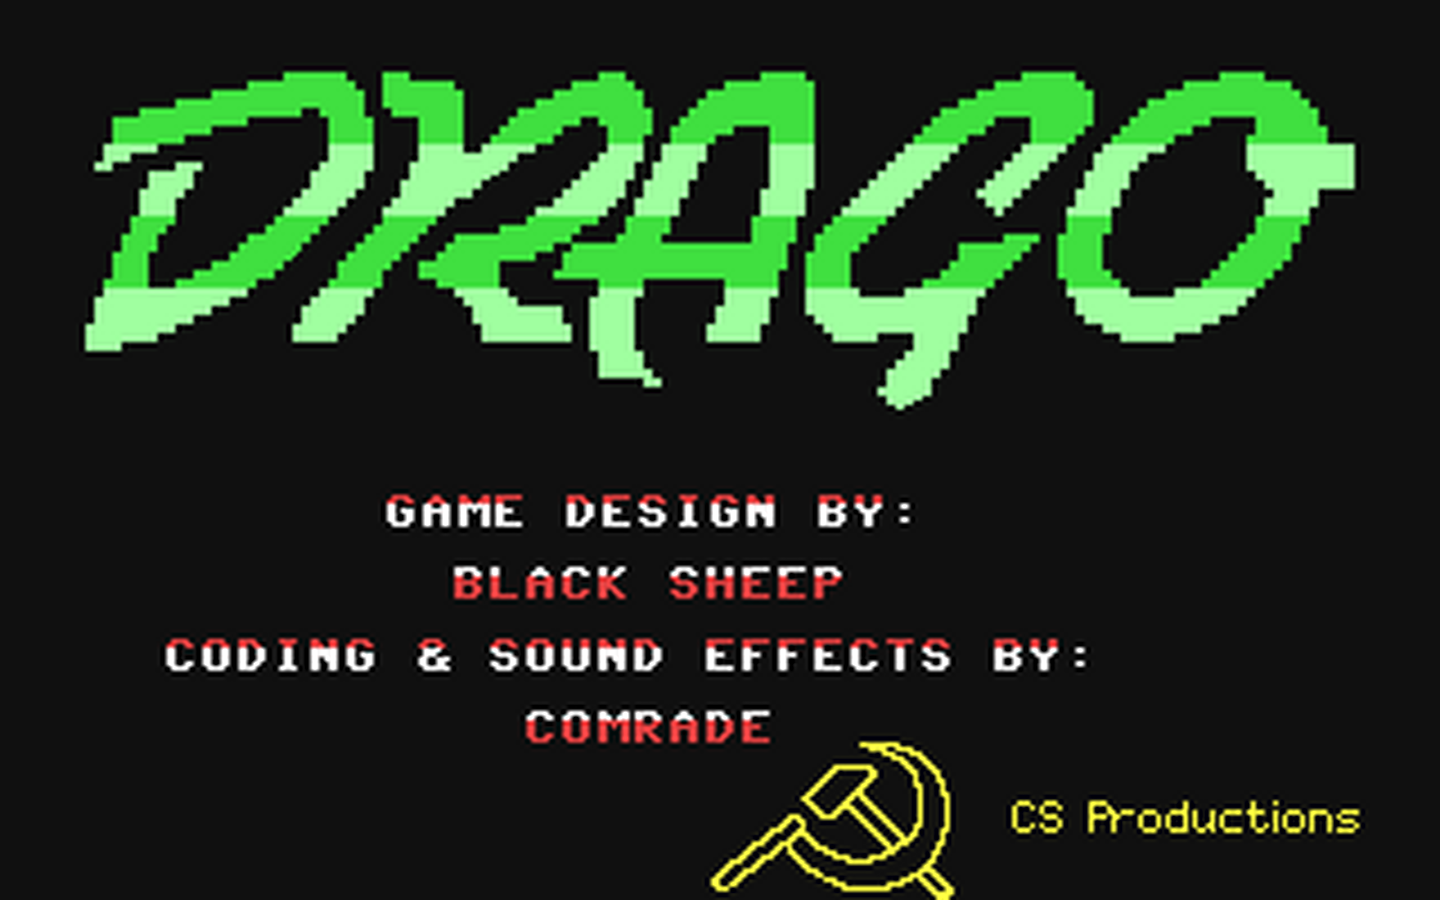 C64 GameBase Drago (Public_Domain)